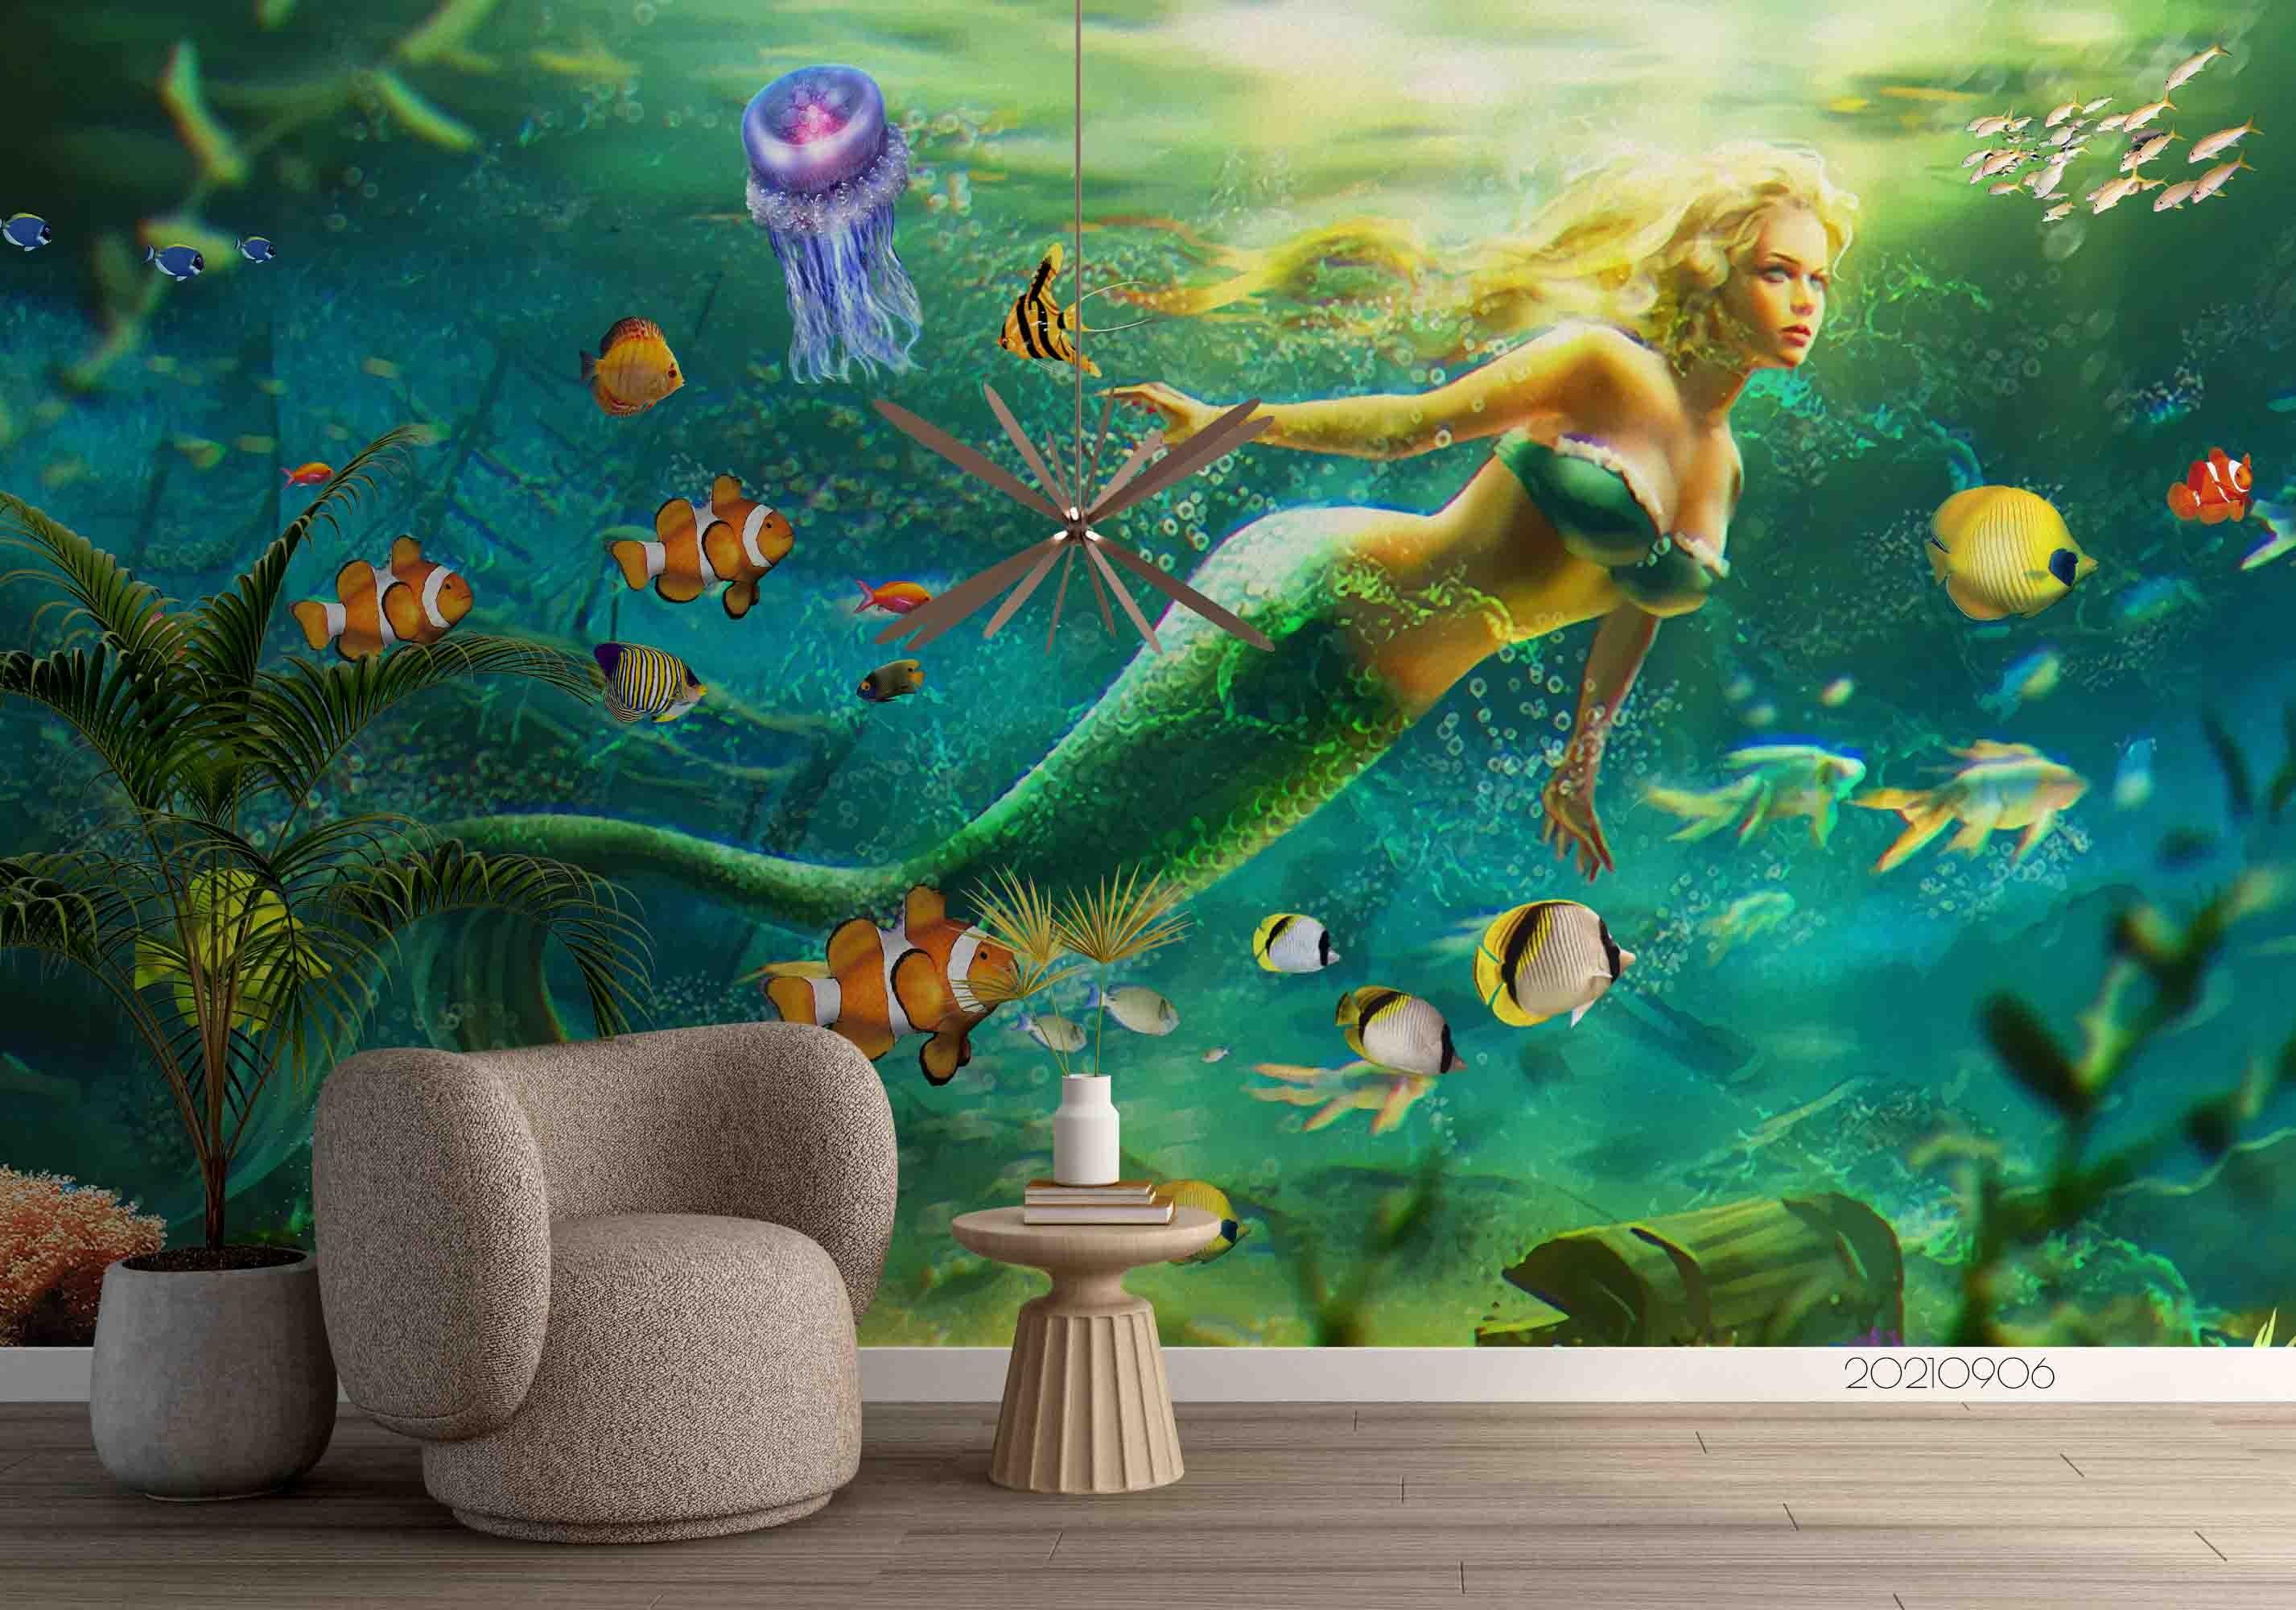 3D Mermaid Underwater World Wall Mural Wallpaper LQH 574- Jess Art Decoration